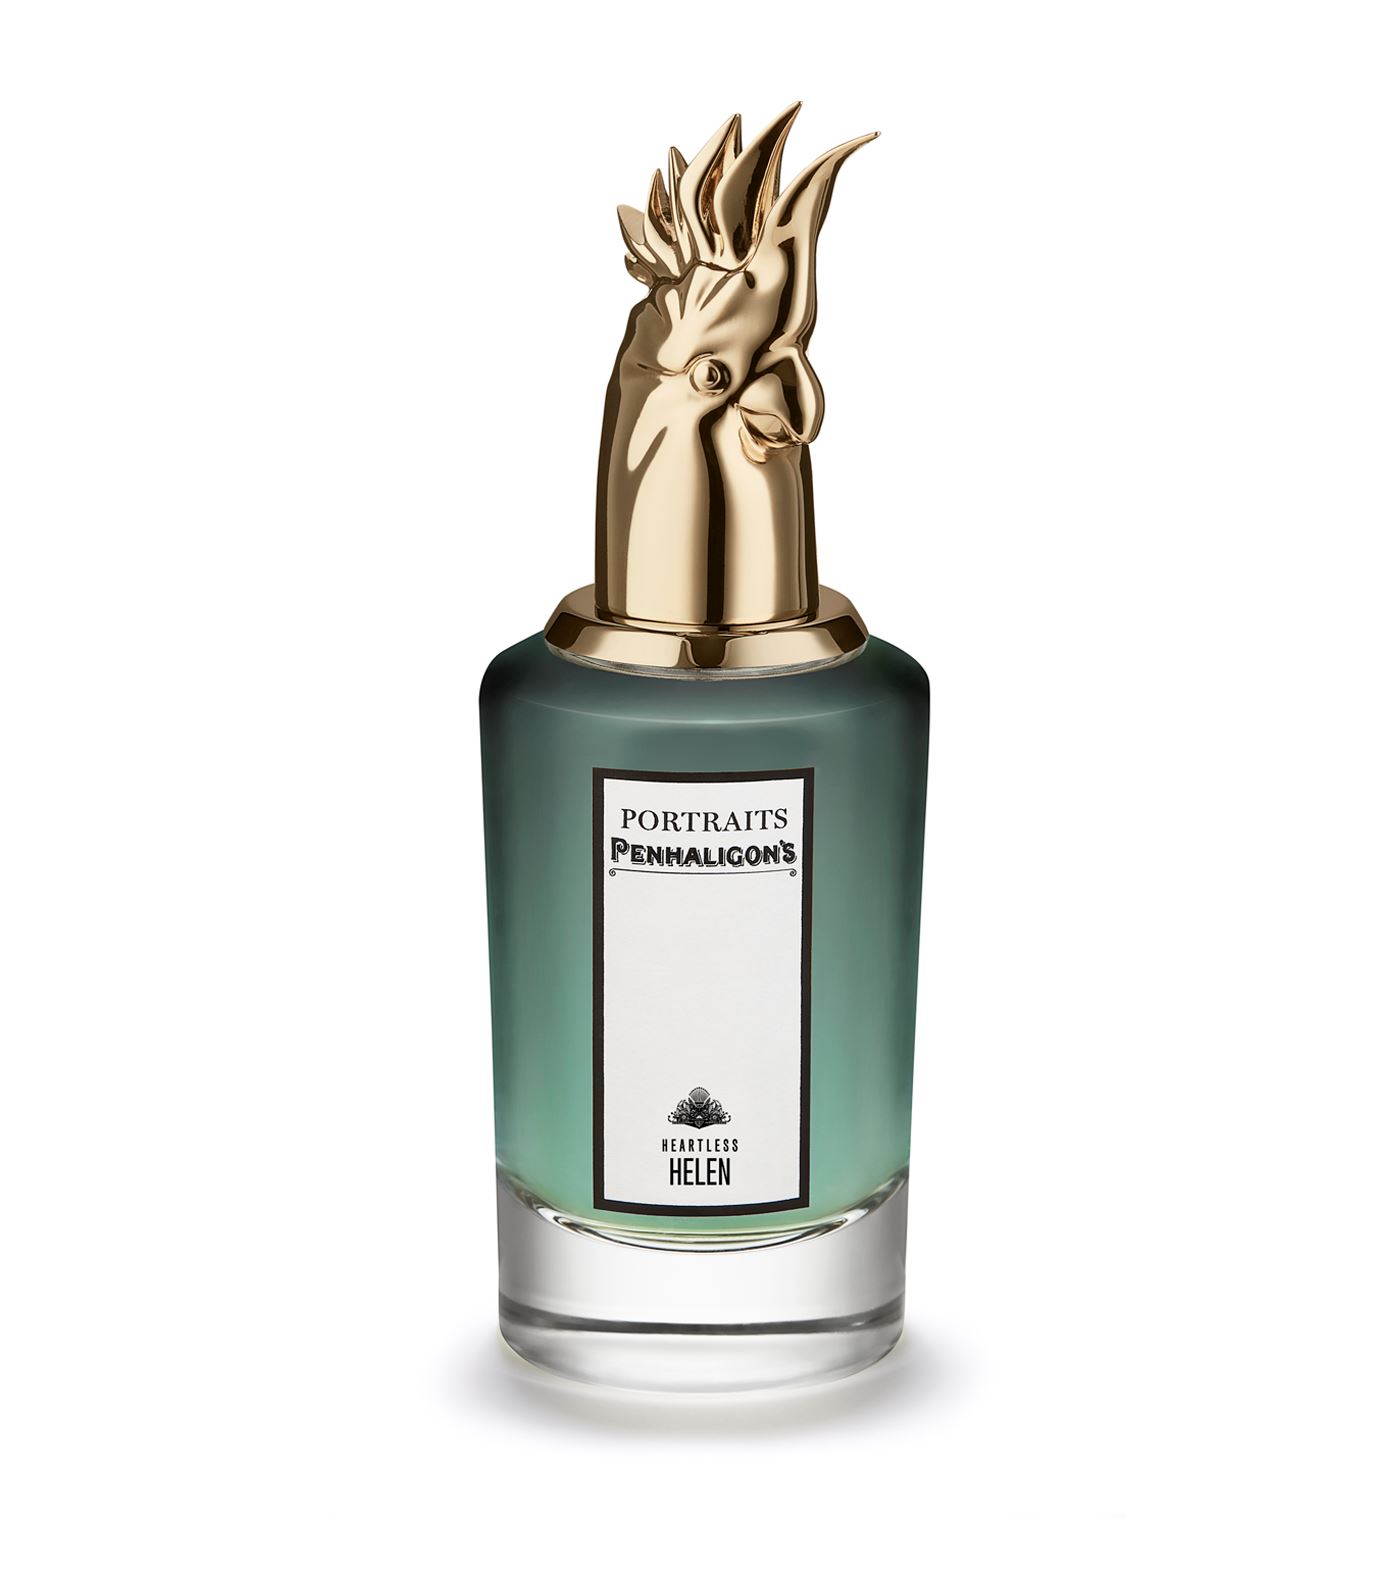 Heartless Helen Penhaligon's perfume - a new fragrance for women 2019